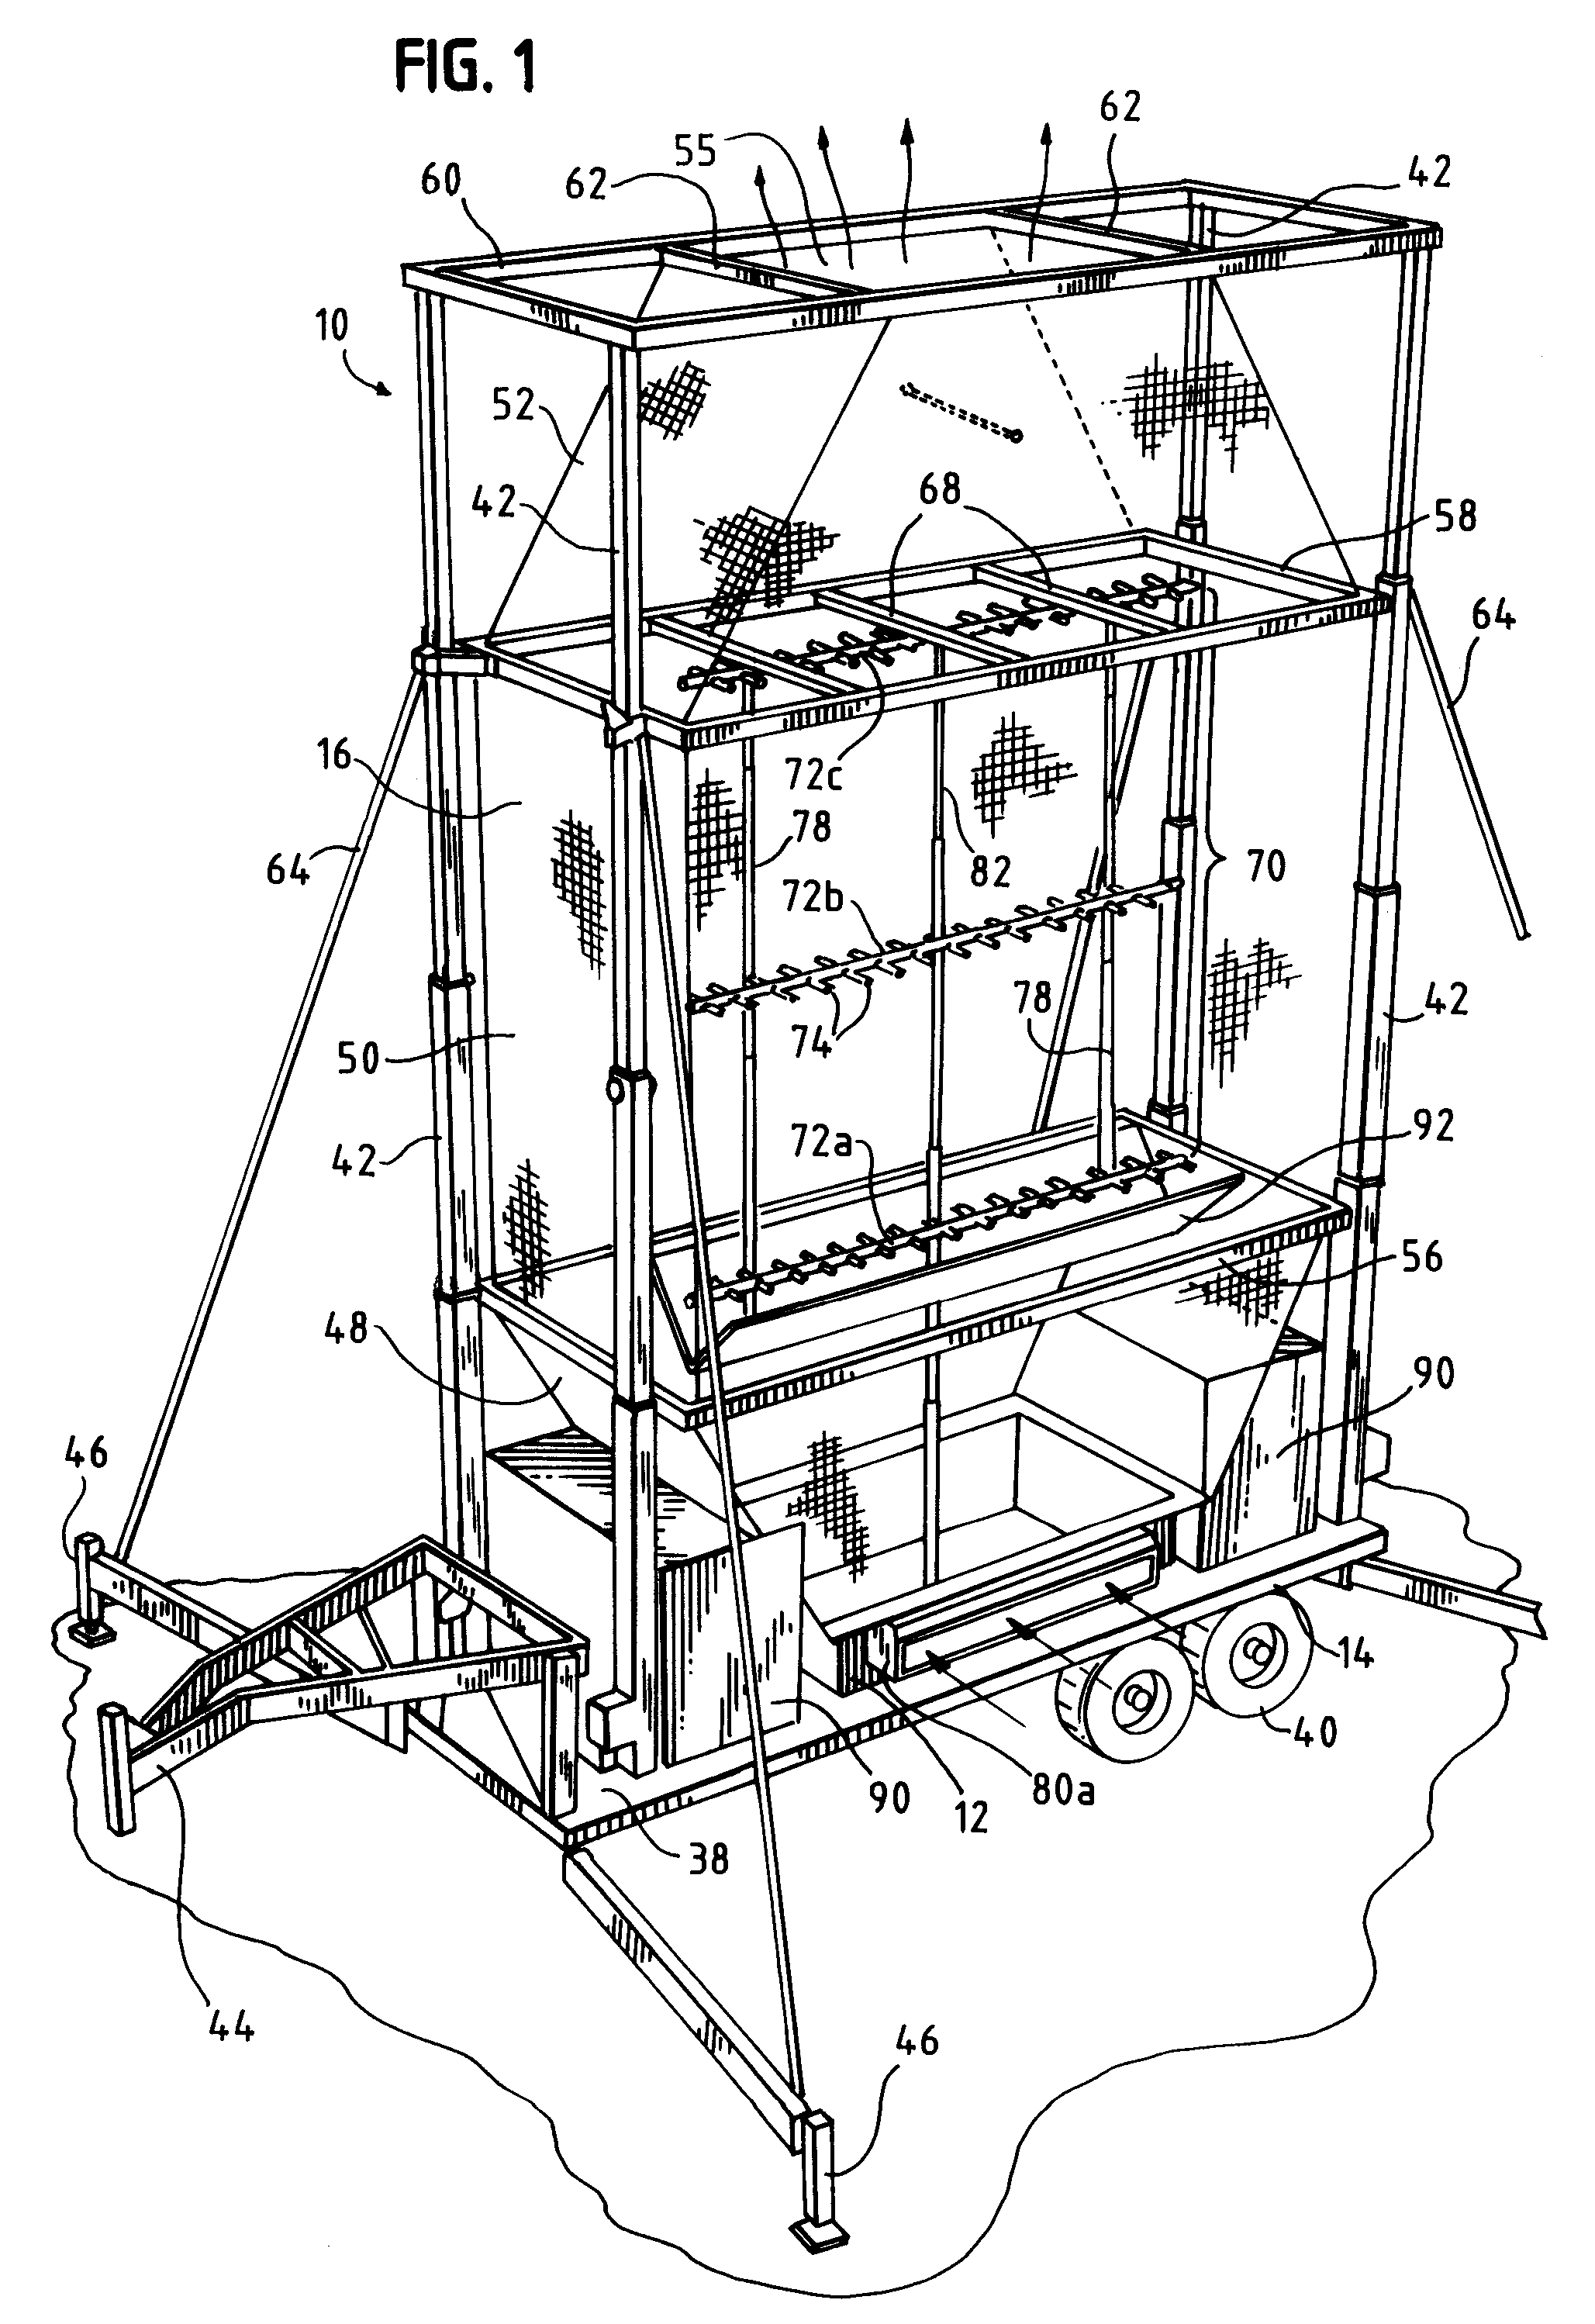 Portable evaporation chamber